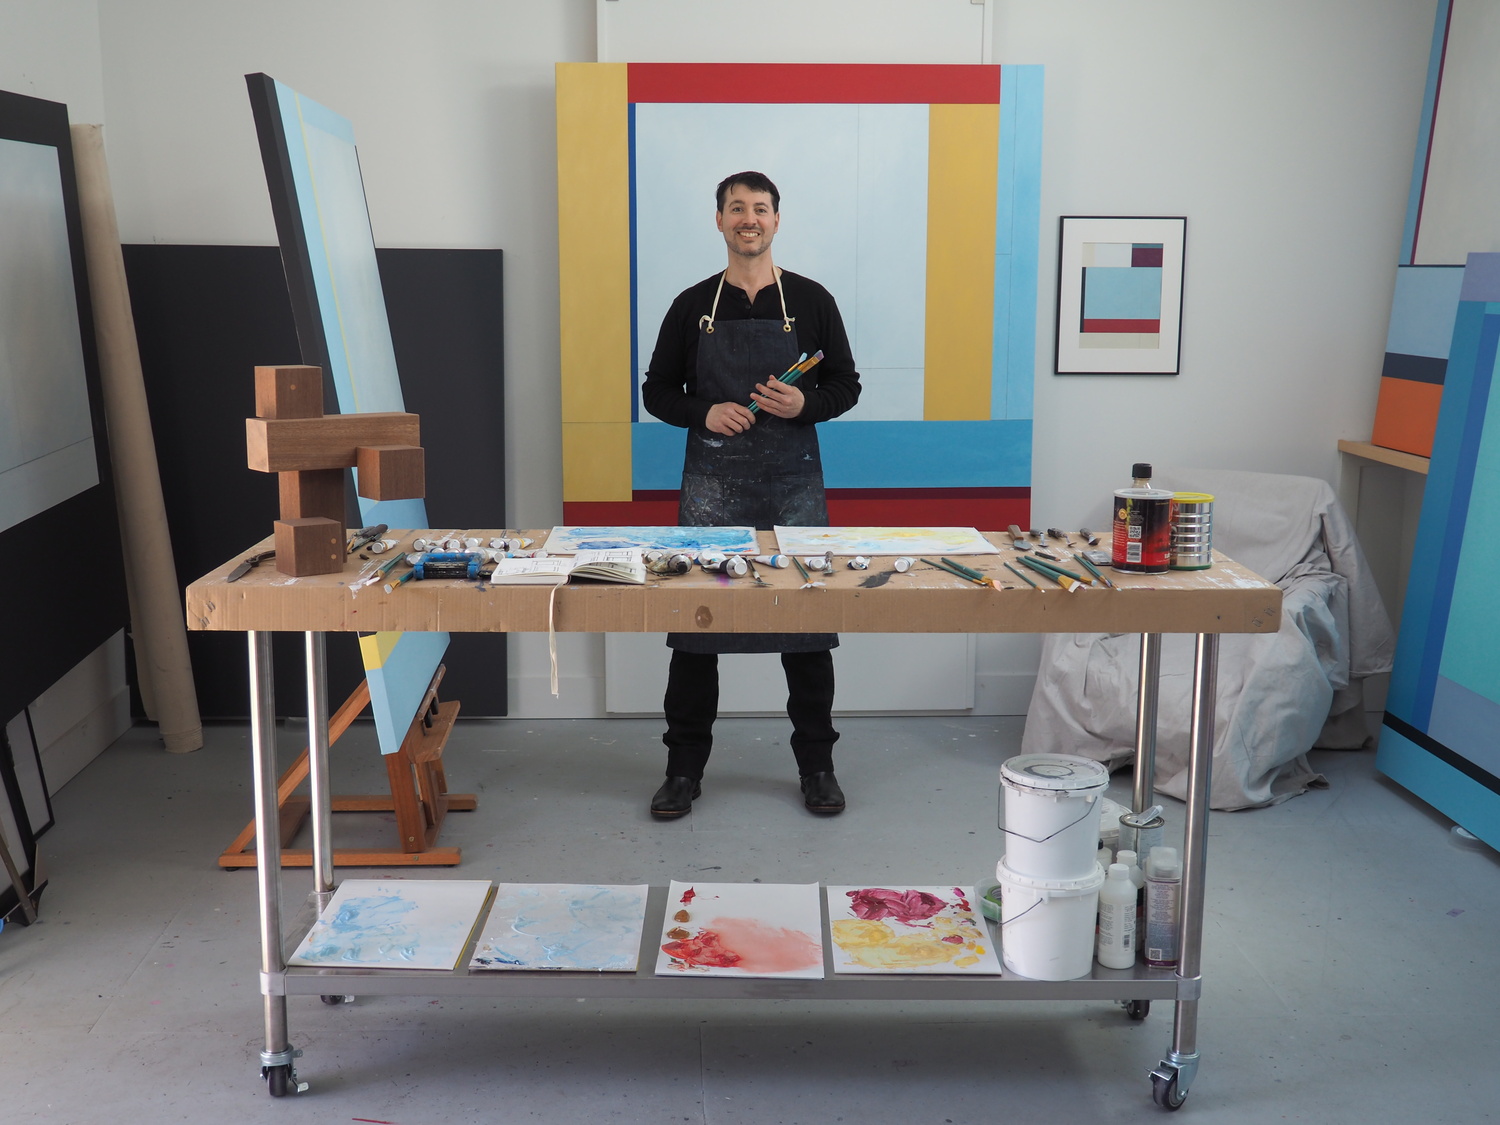 Artist Chris Kelly in his studio. COURTESY THE ARTIST